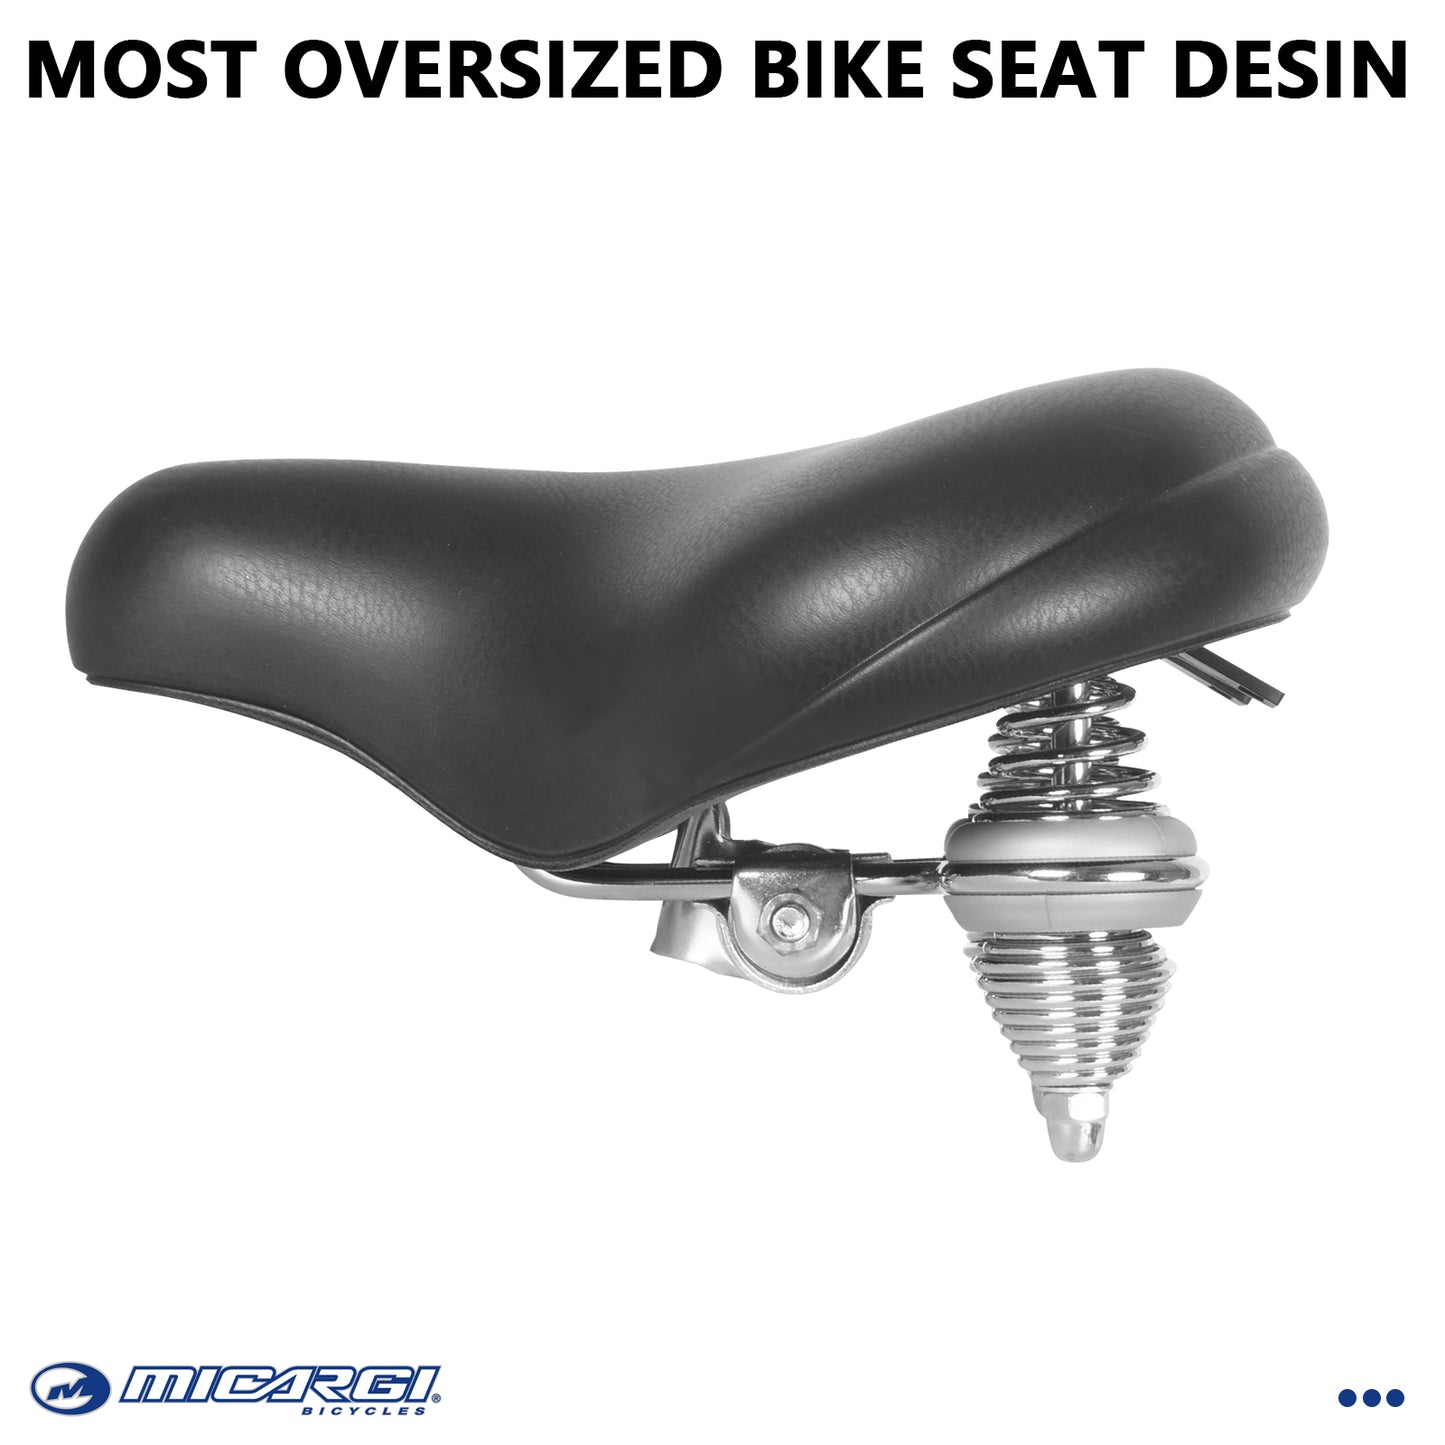 Micargi Oversized Most Comfortable Bike Seat Wide Soft Padded Bike Saddle